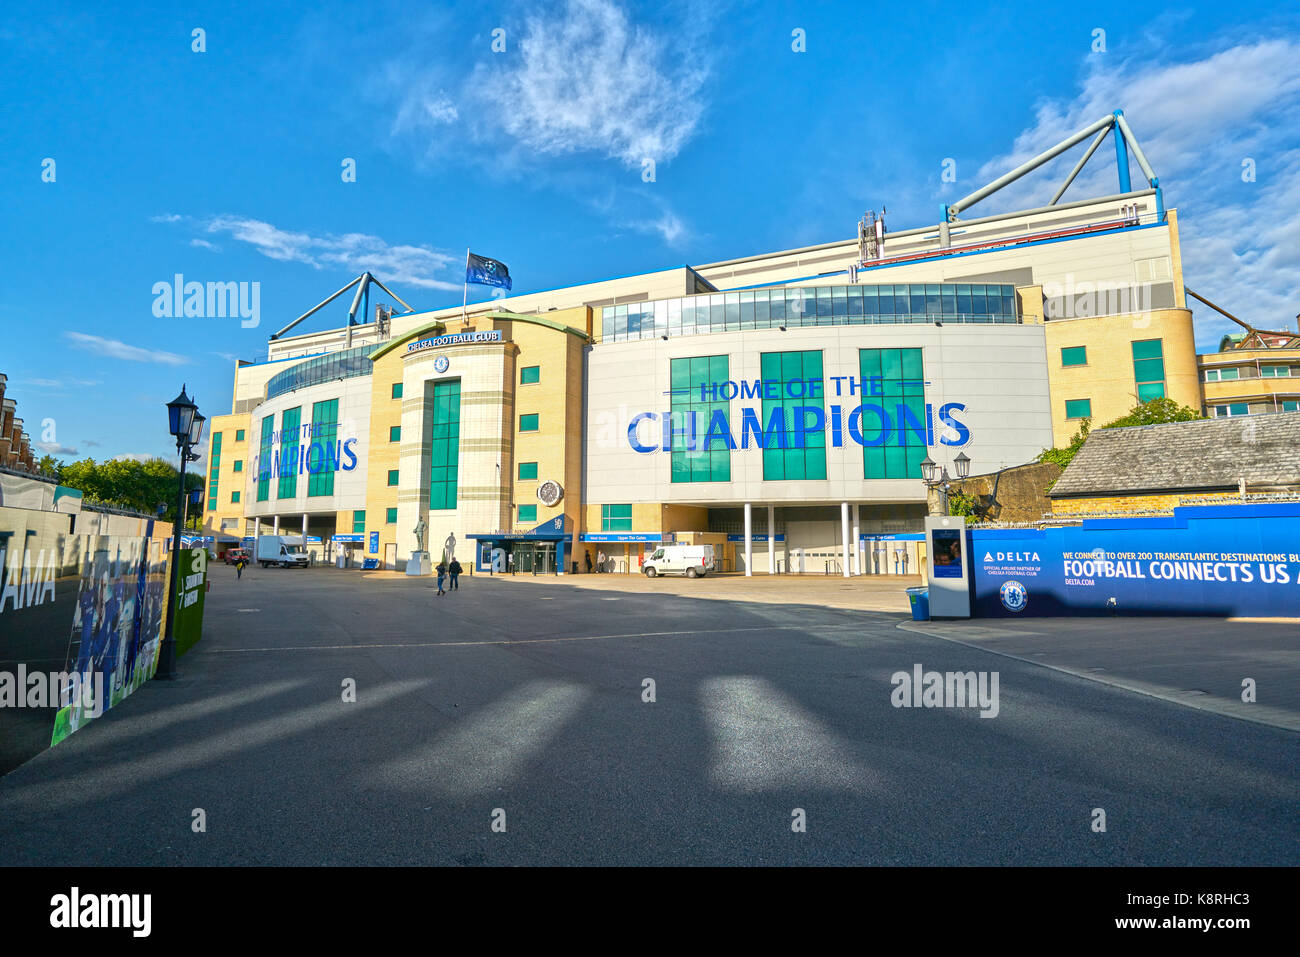 Stade de football de Chelsea, Stamford Bridge Banque D'Images